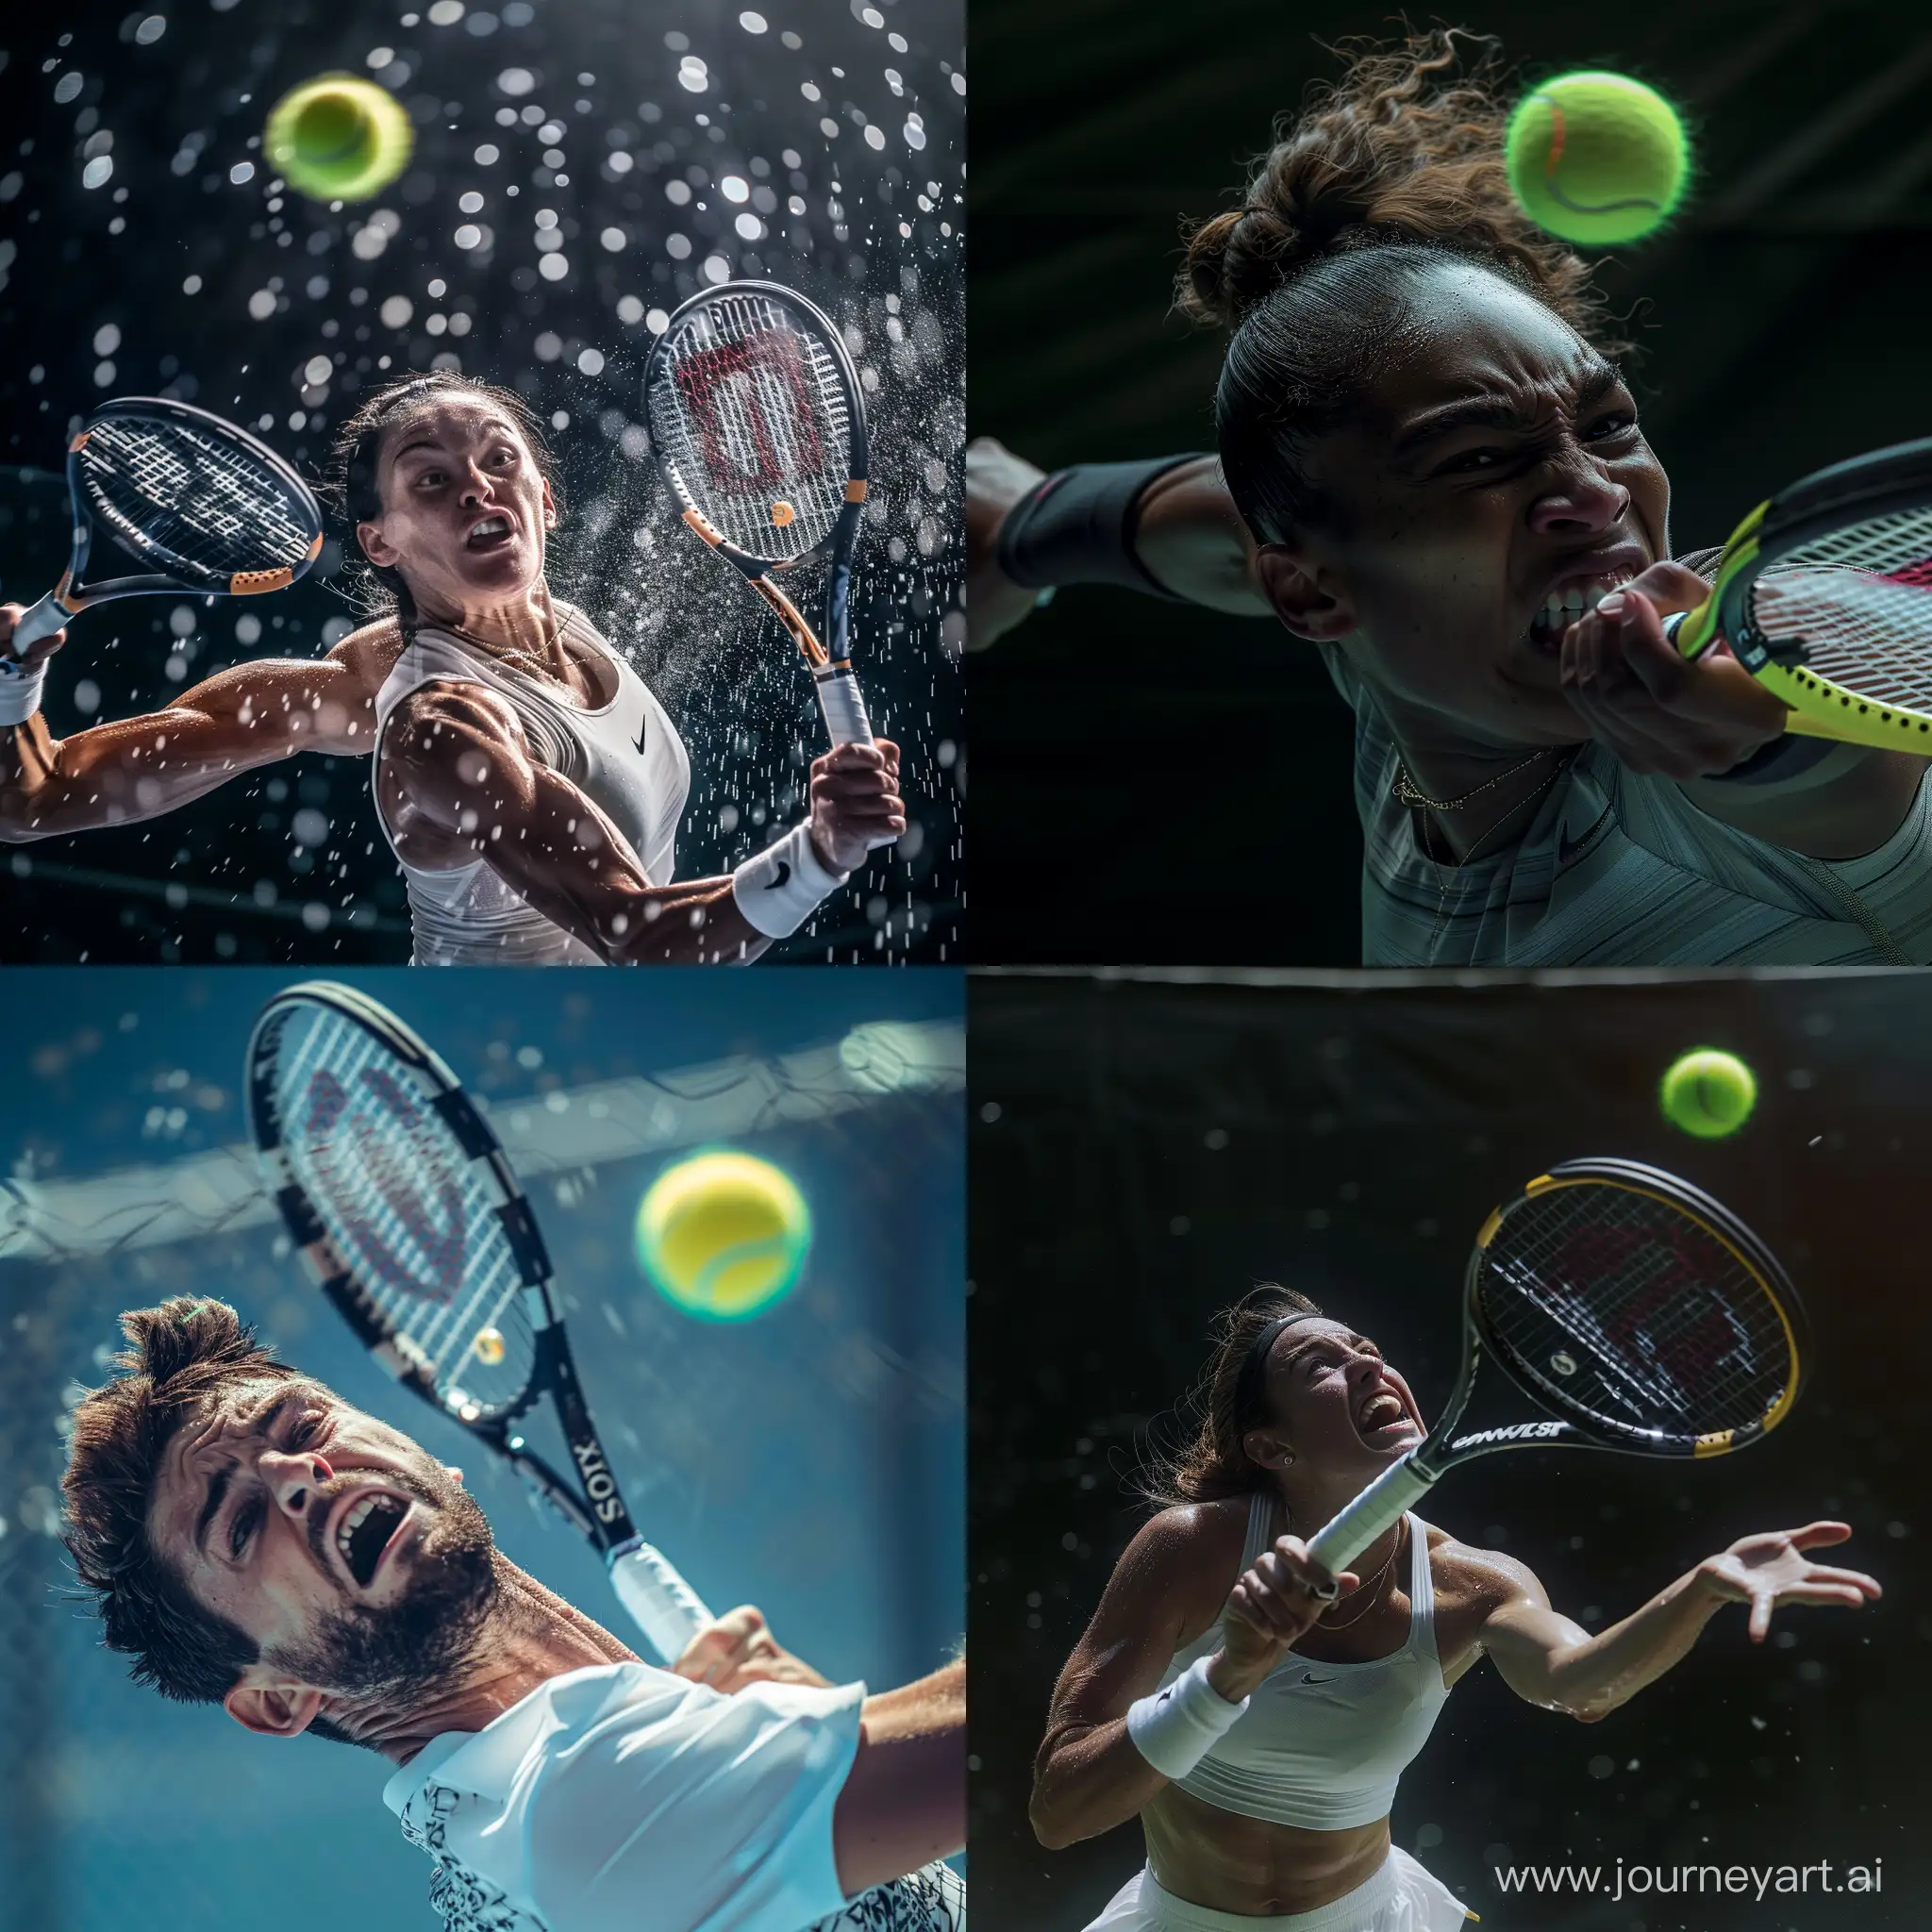 Intense-Tennis-Serve-Athlete-in-Action-with-HighSpeed-Detail